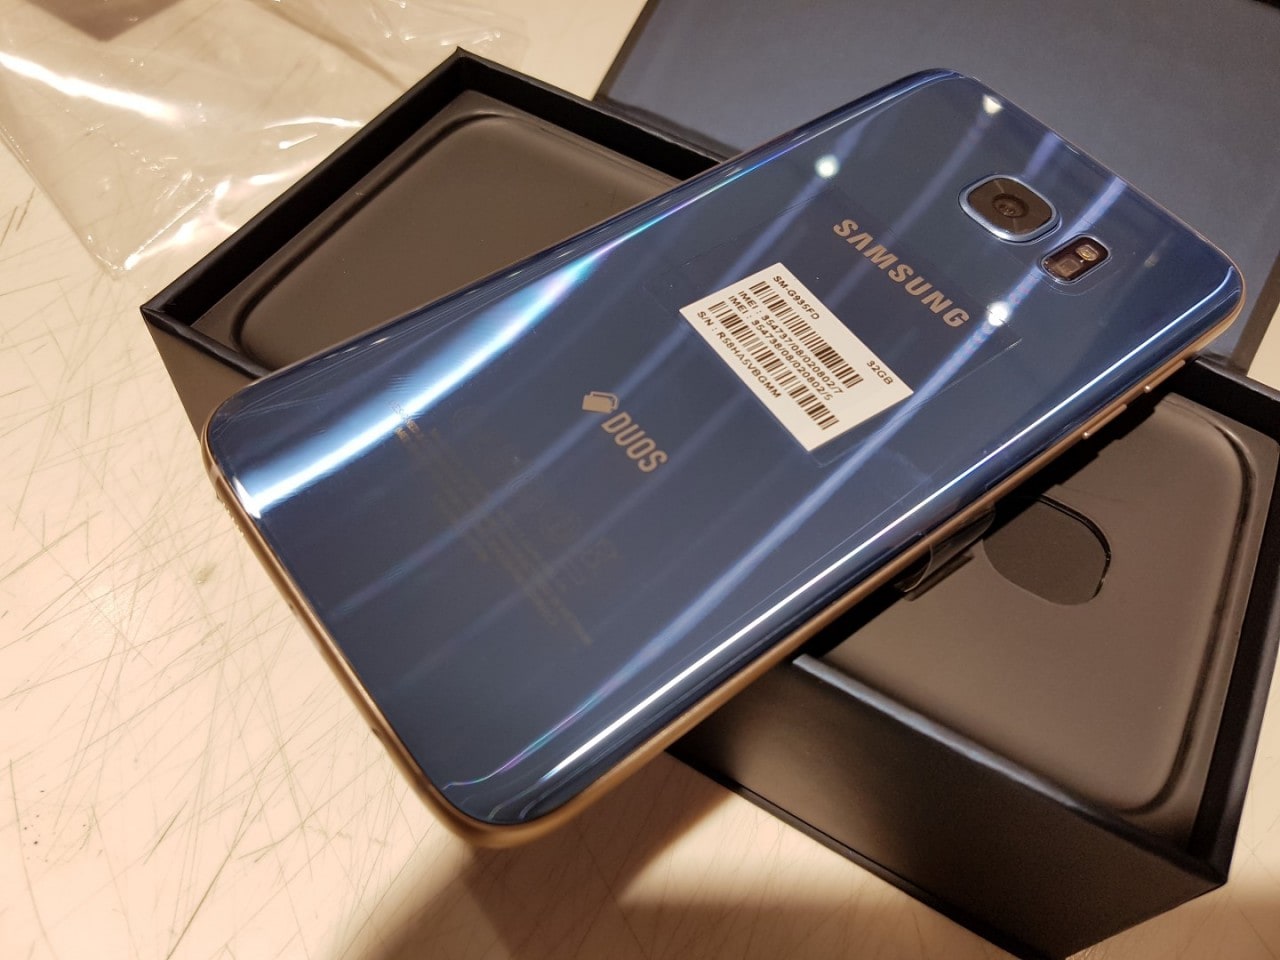 Un unboxing fotografico per Galaxy S7 edge Blue Coral